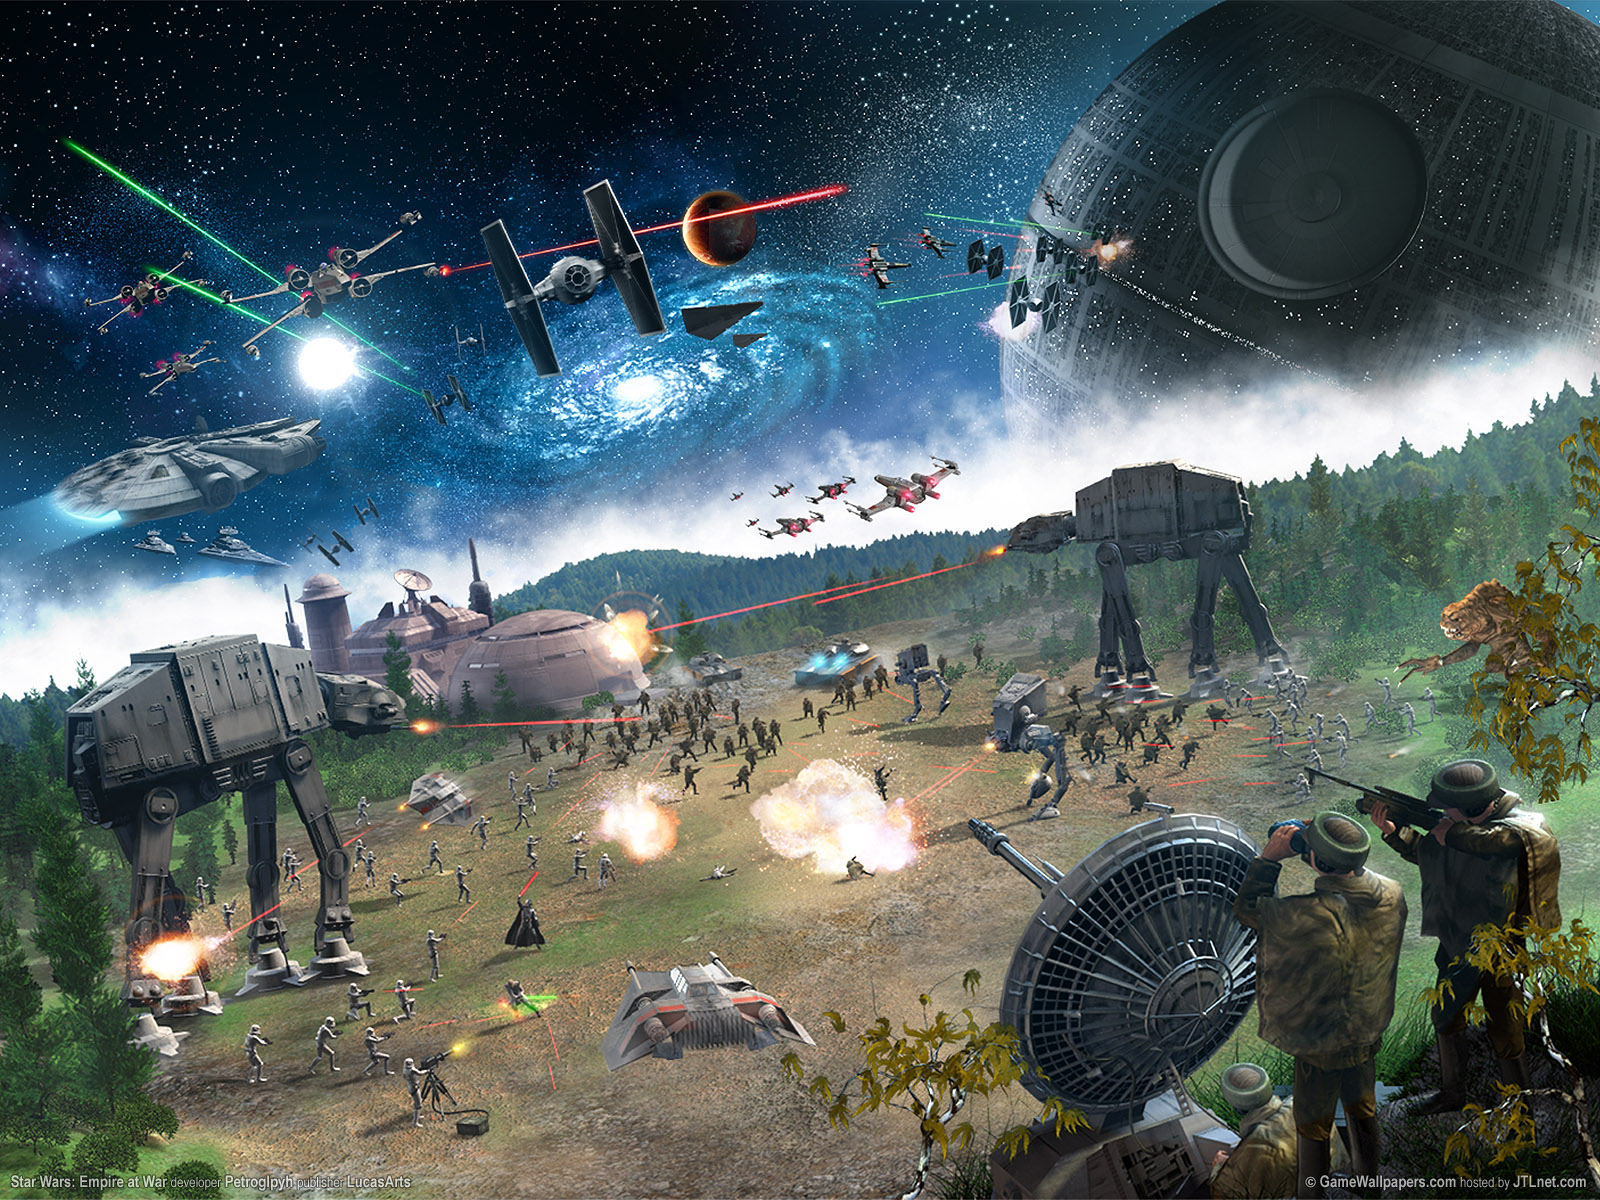 video game, star wars: empire at war, at at walker, battle, death star, millennium falcon, sci fi, star wars, tie fighter, x wing